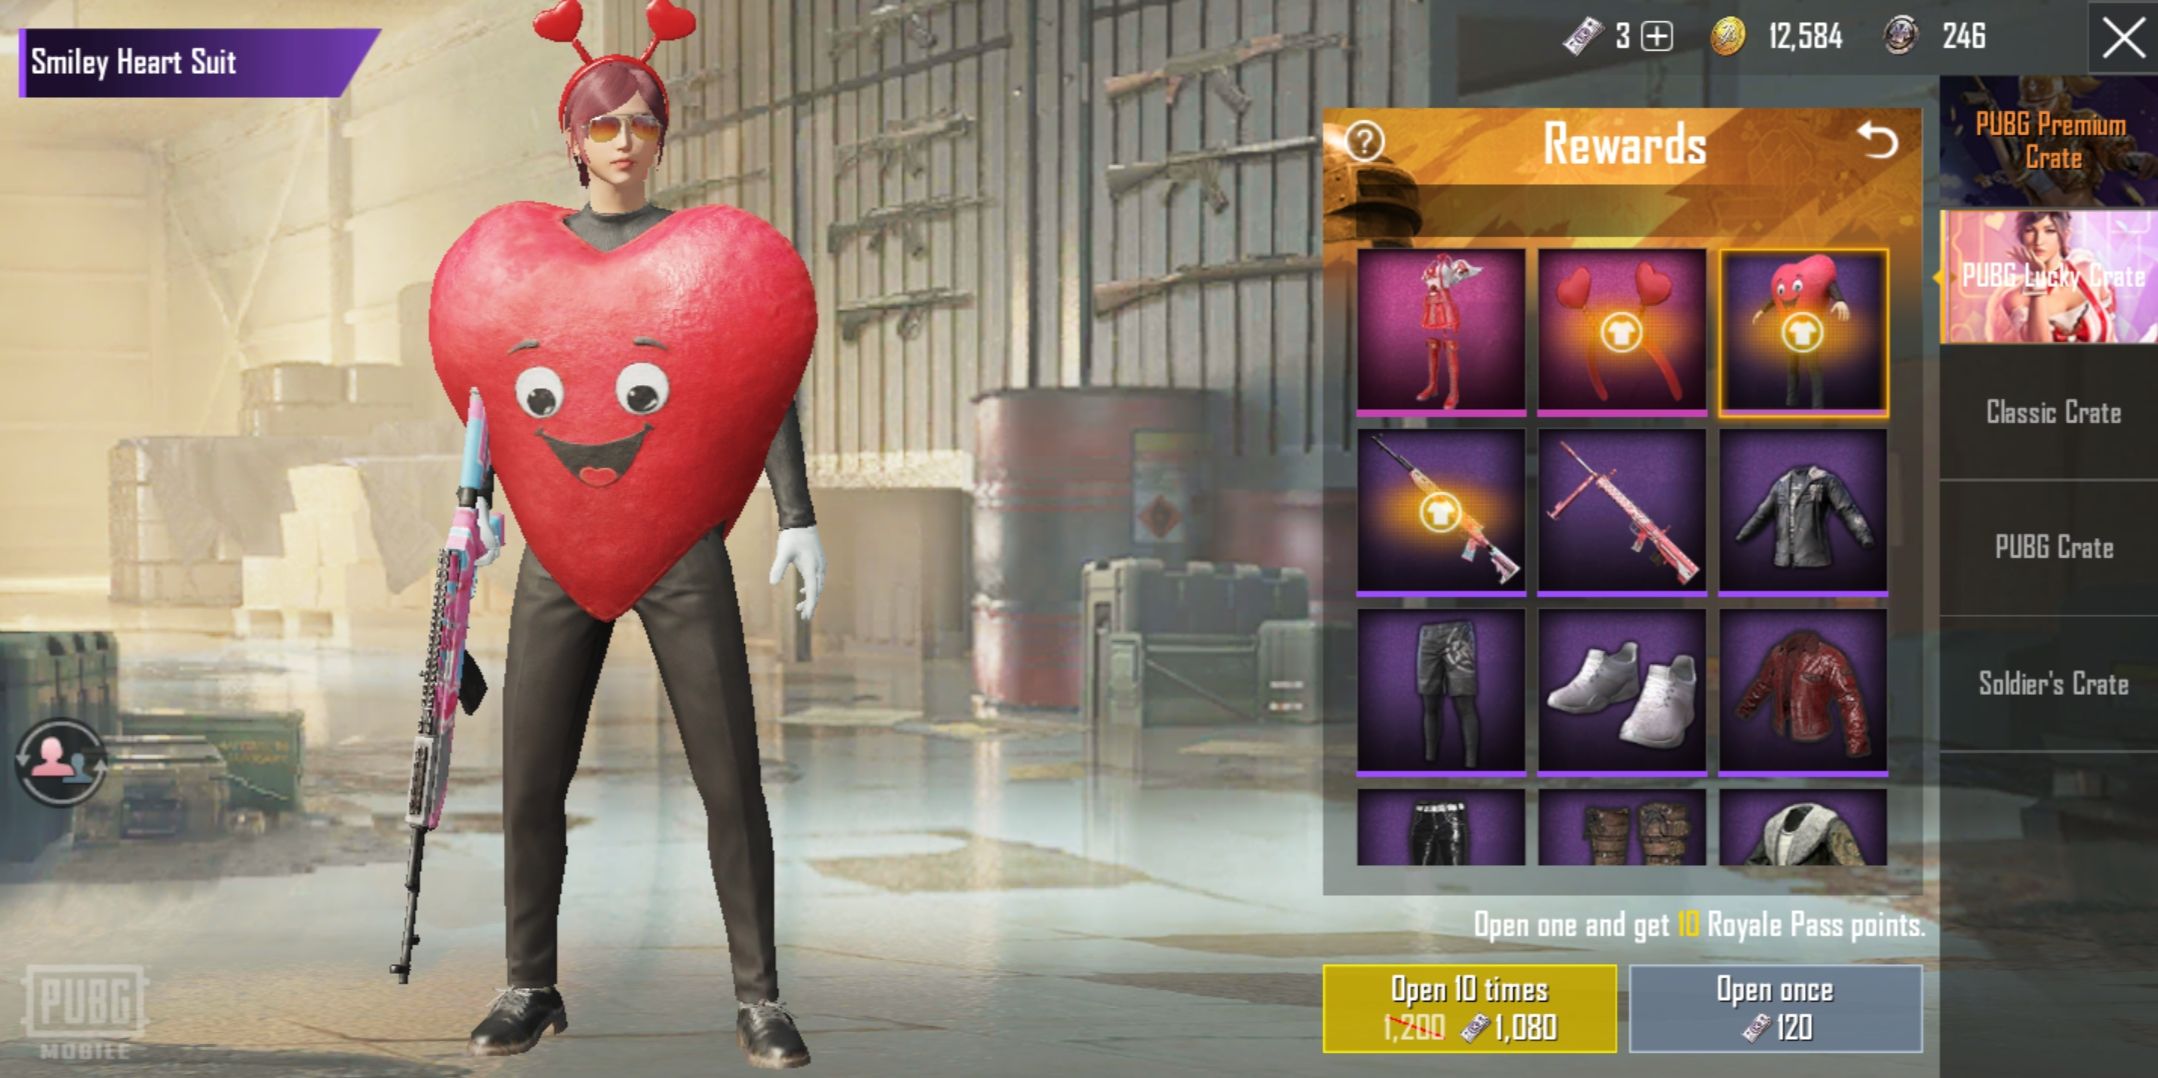 Smiley Heart Suit skin di PUBG Mobile menyambut Valentine